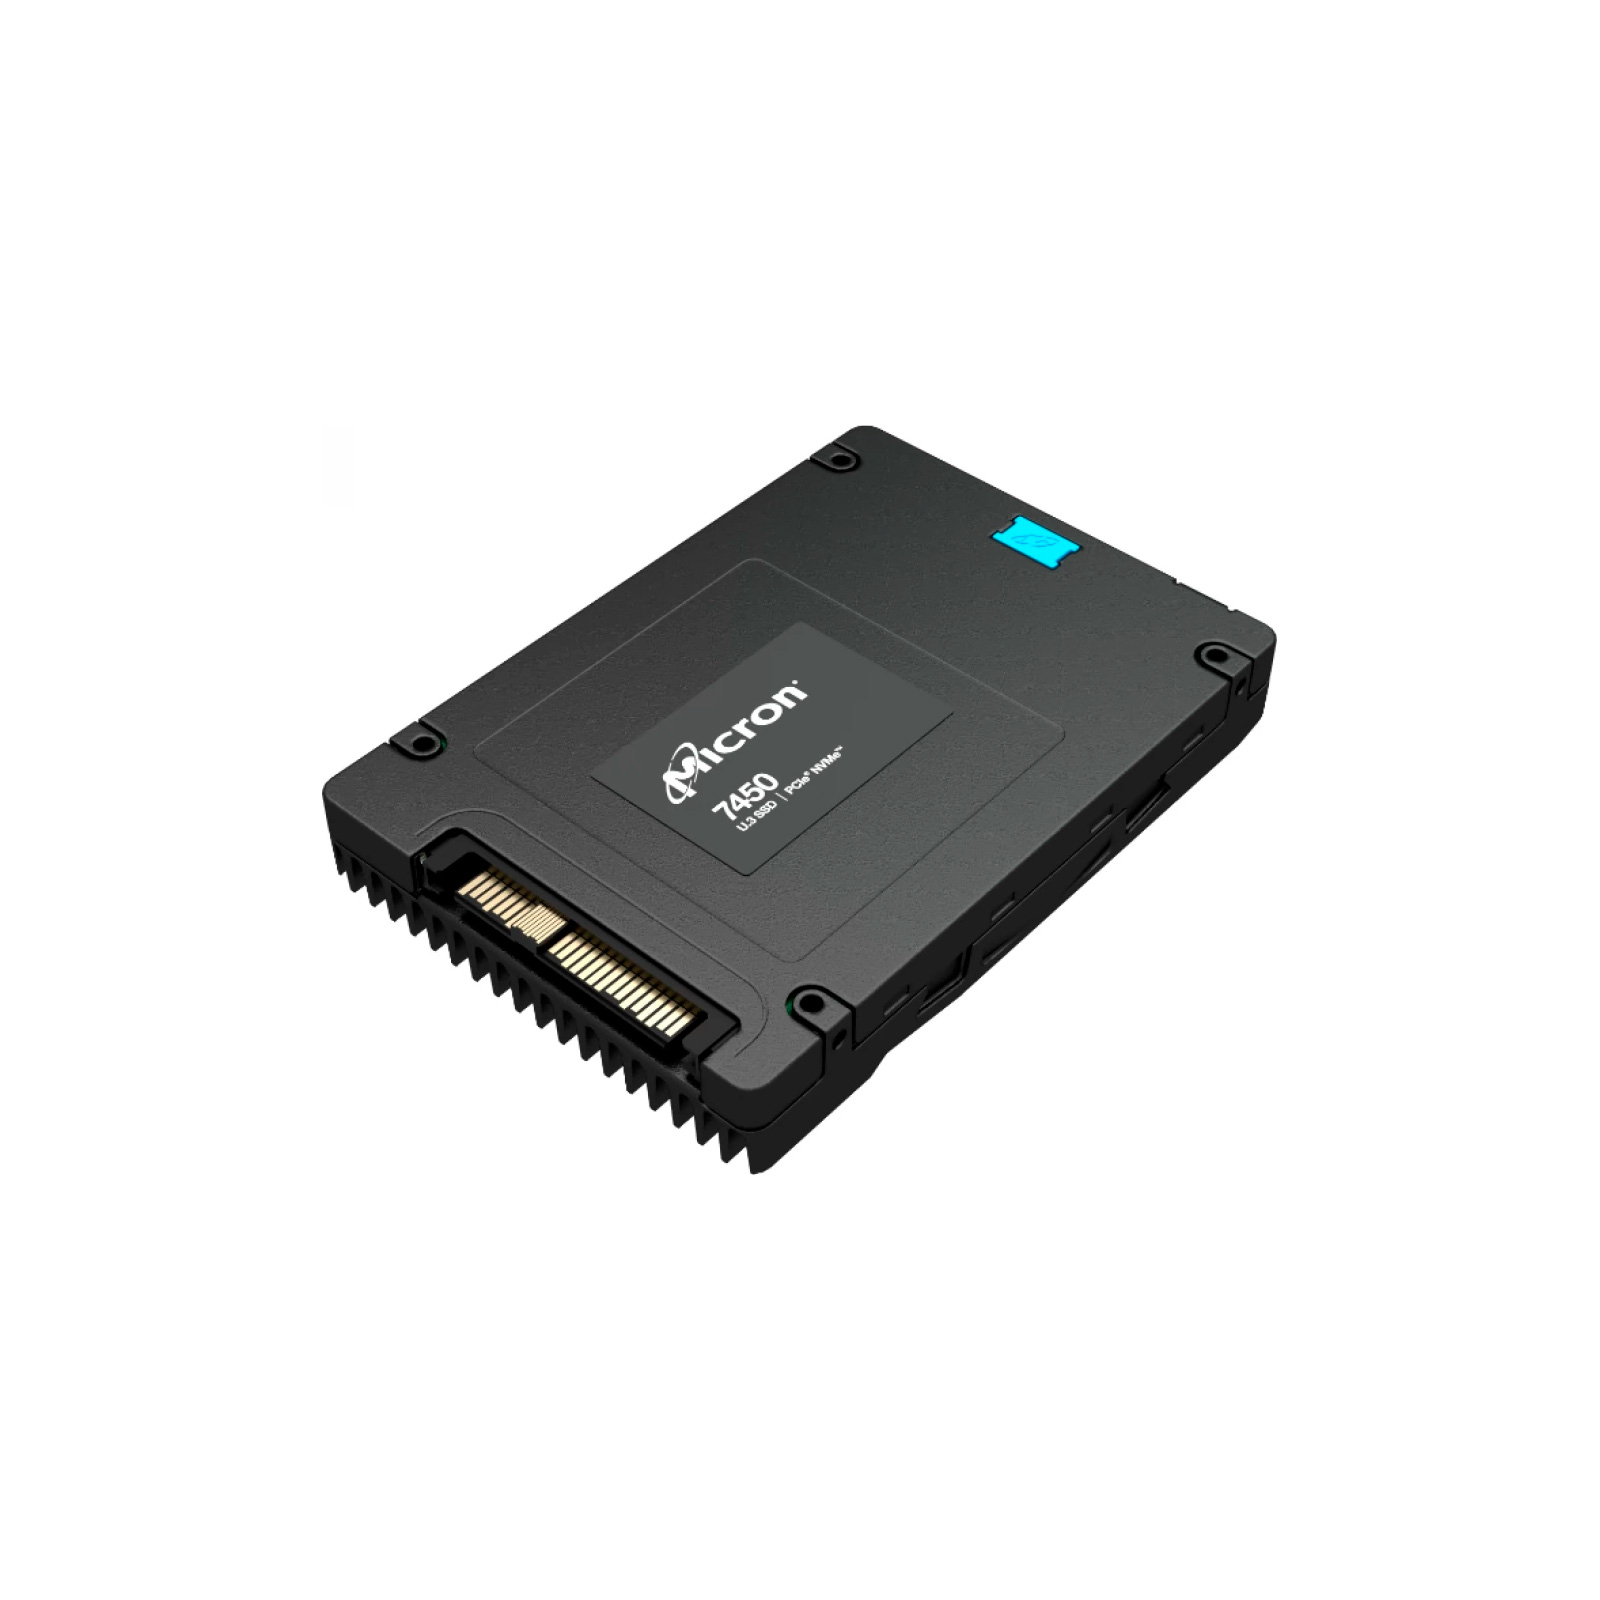 Накопитель SSD U.3 2.5" 1.6TB 7450 MAX 7mm Micron (MTFDKCB1T6TFS-1BC1ZABYYR) изображение 3